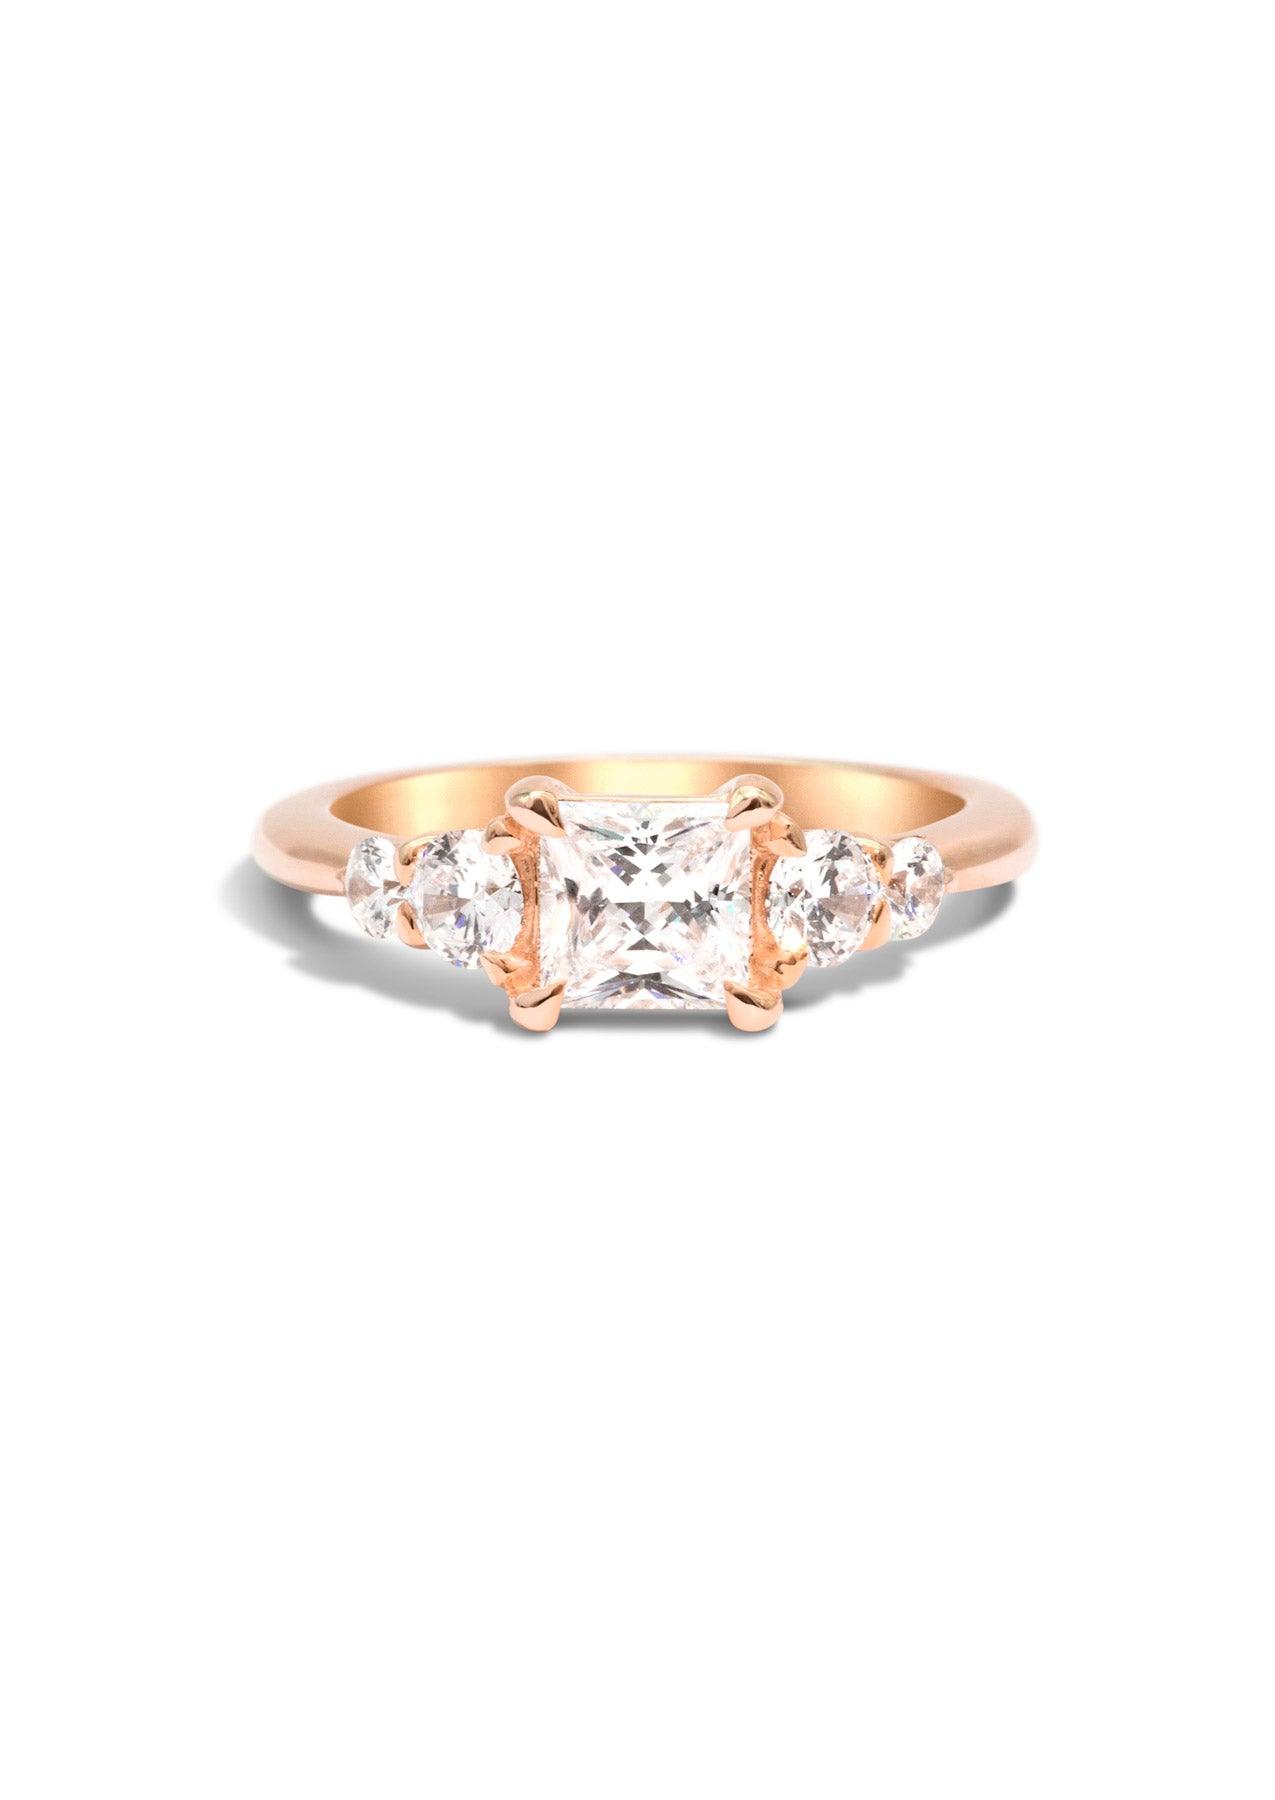 The Vera Rose Gold Cultured Diamond Ring